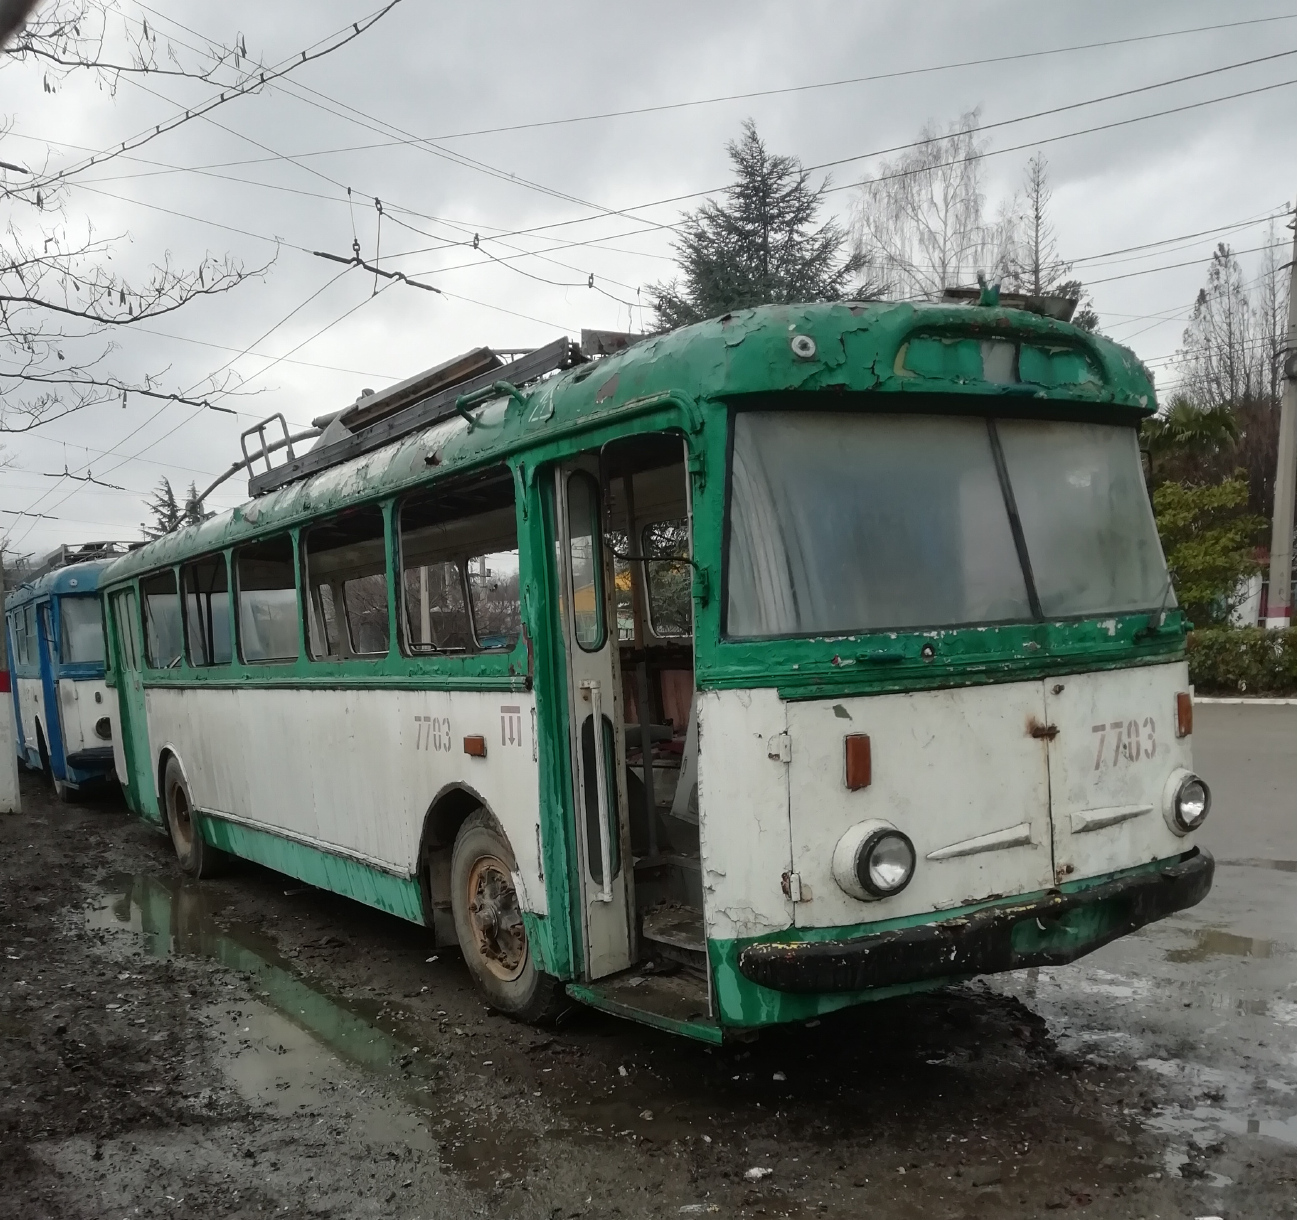 Крымский троллейбус, Škoda 9TrH27 № 7703